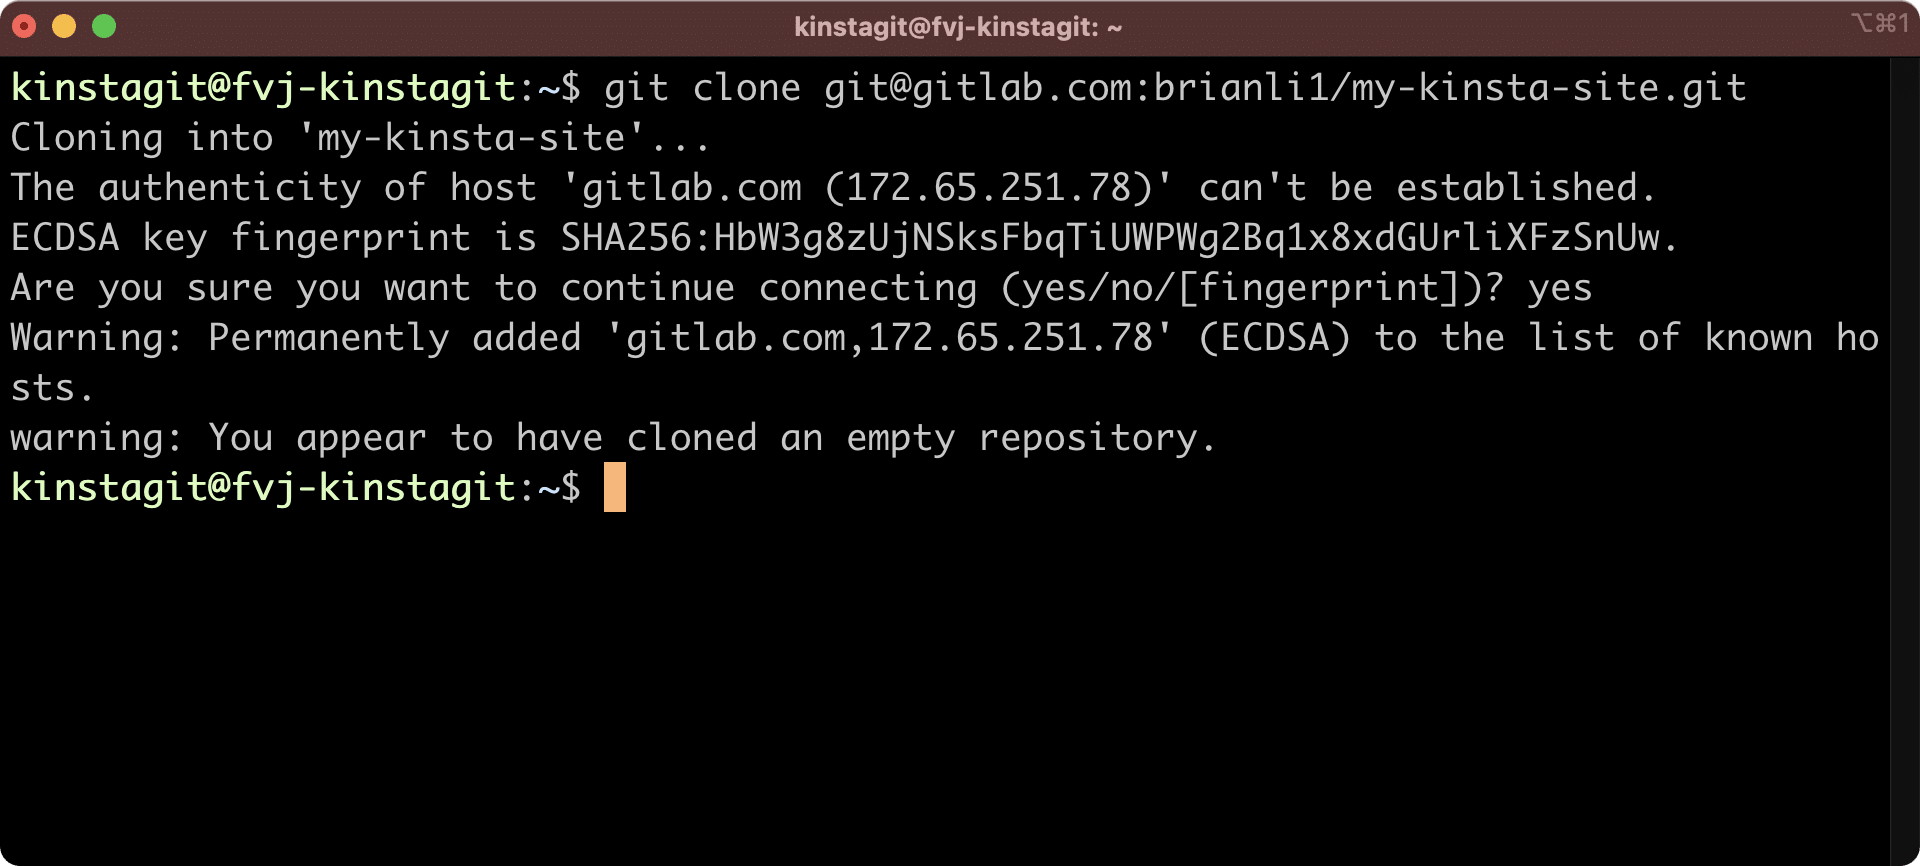 Kloon je GitLab repository naar je Kinsta live omgeving.